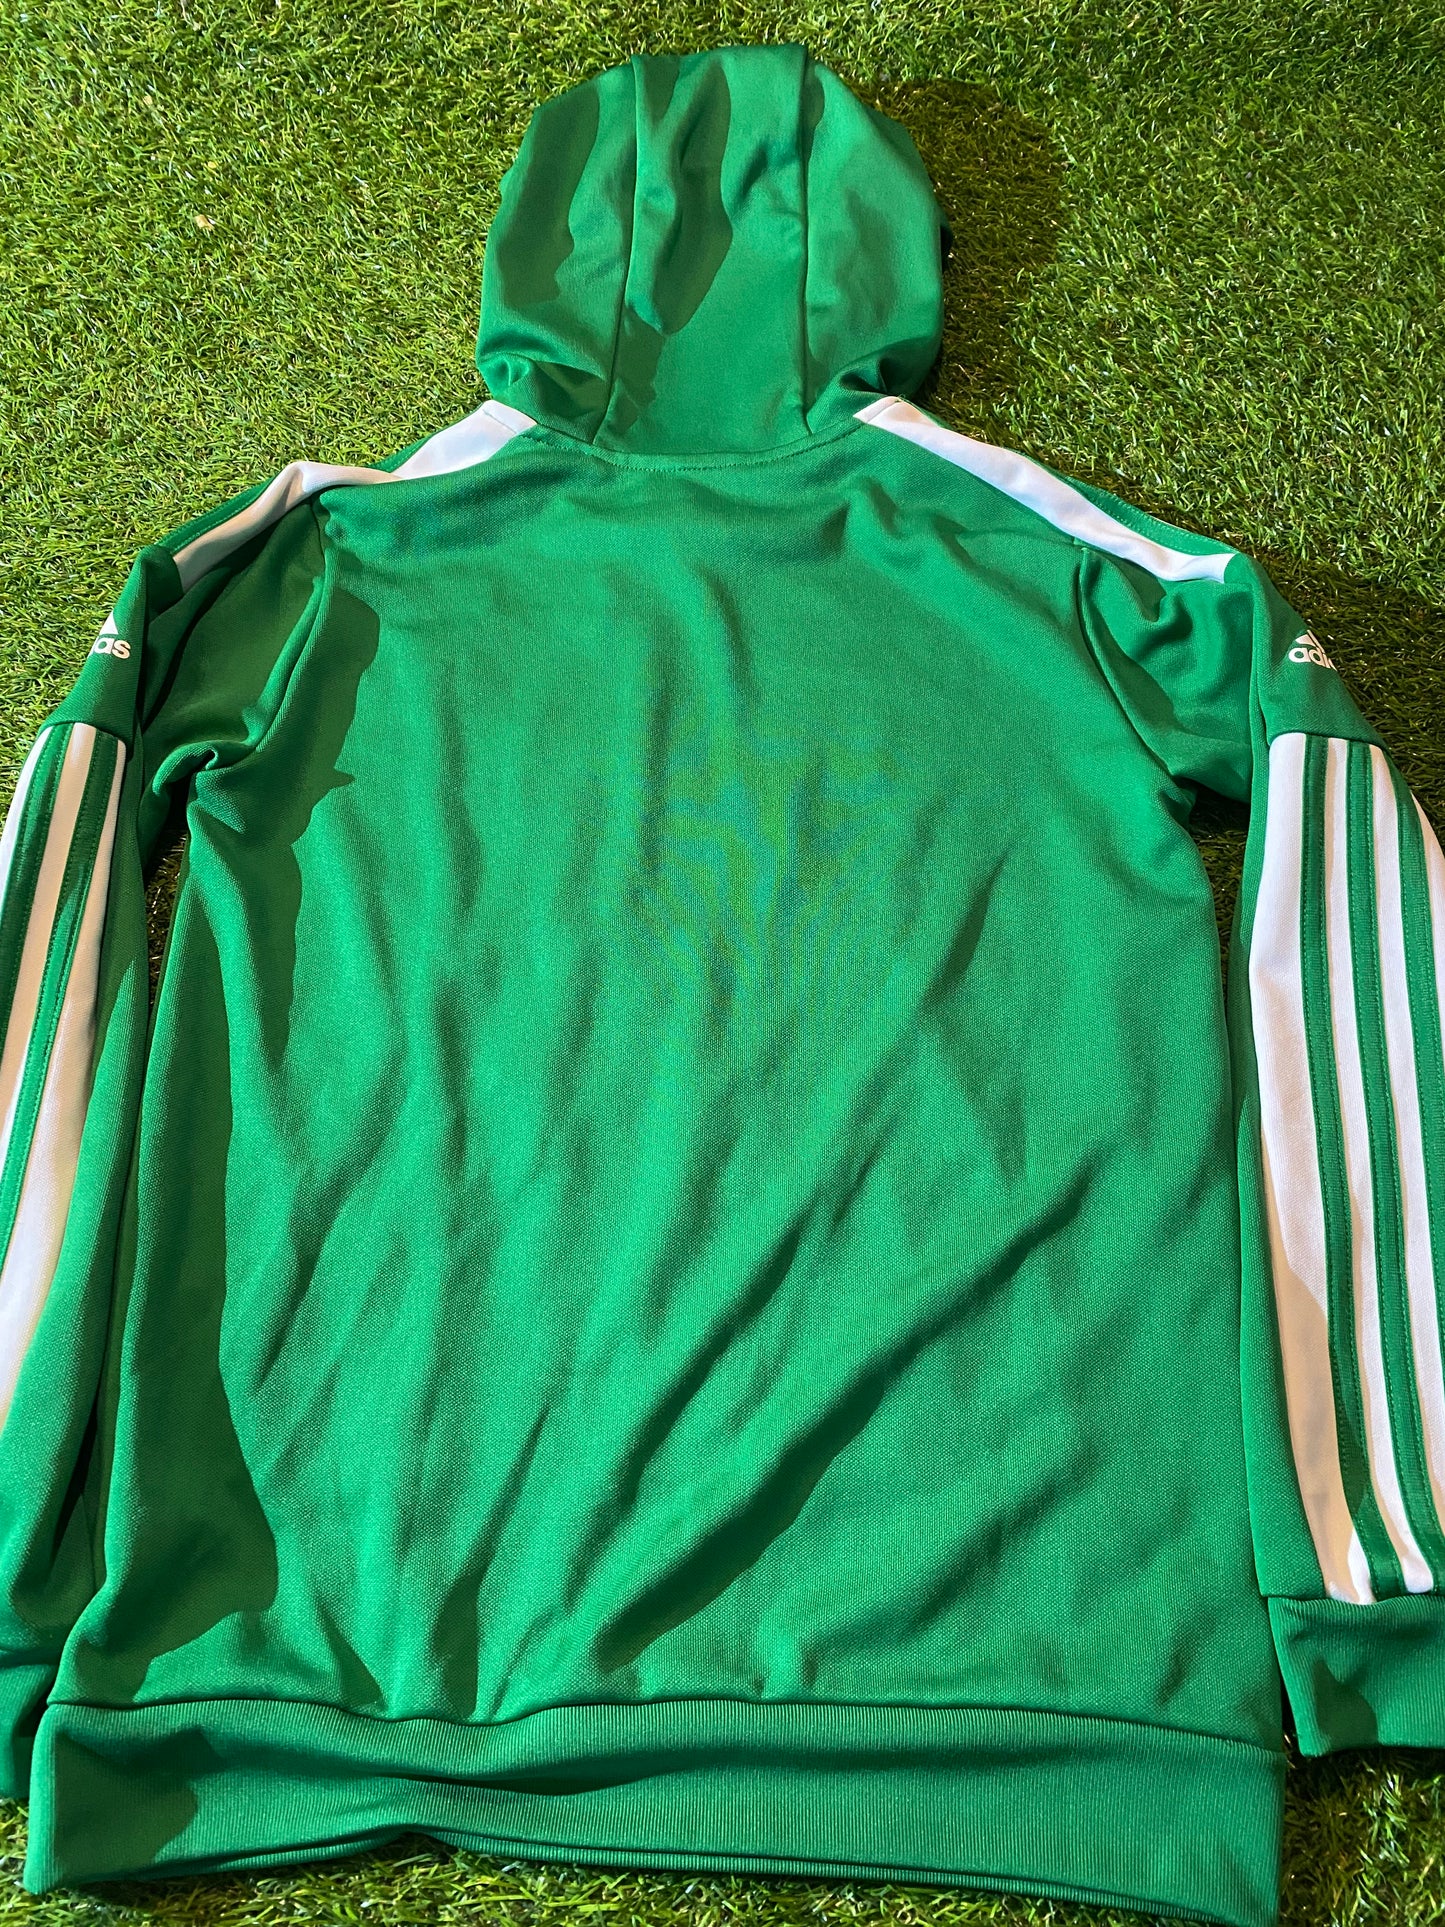 Celtic FC Scotland Football Large Boys 10-11 Year Old Adidas Made Single Layered Hoody Top